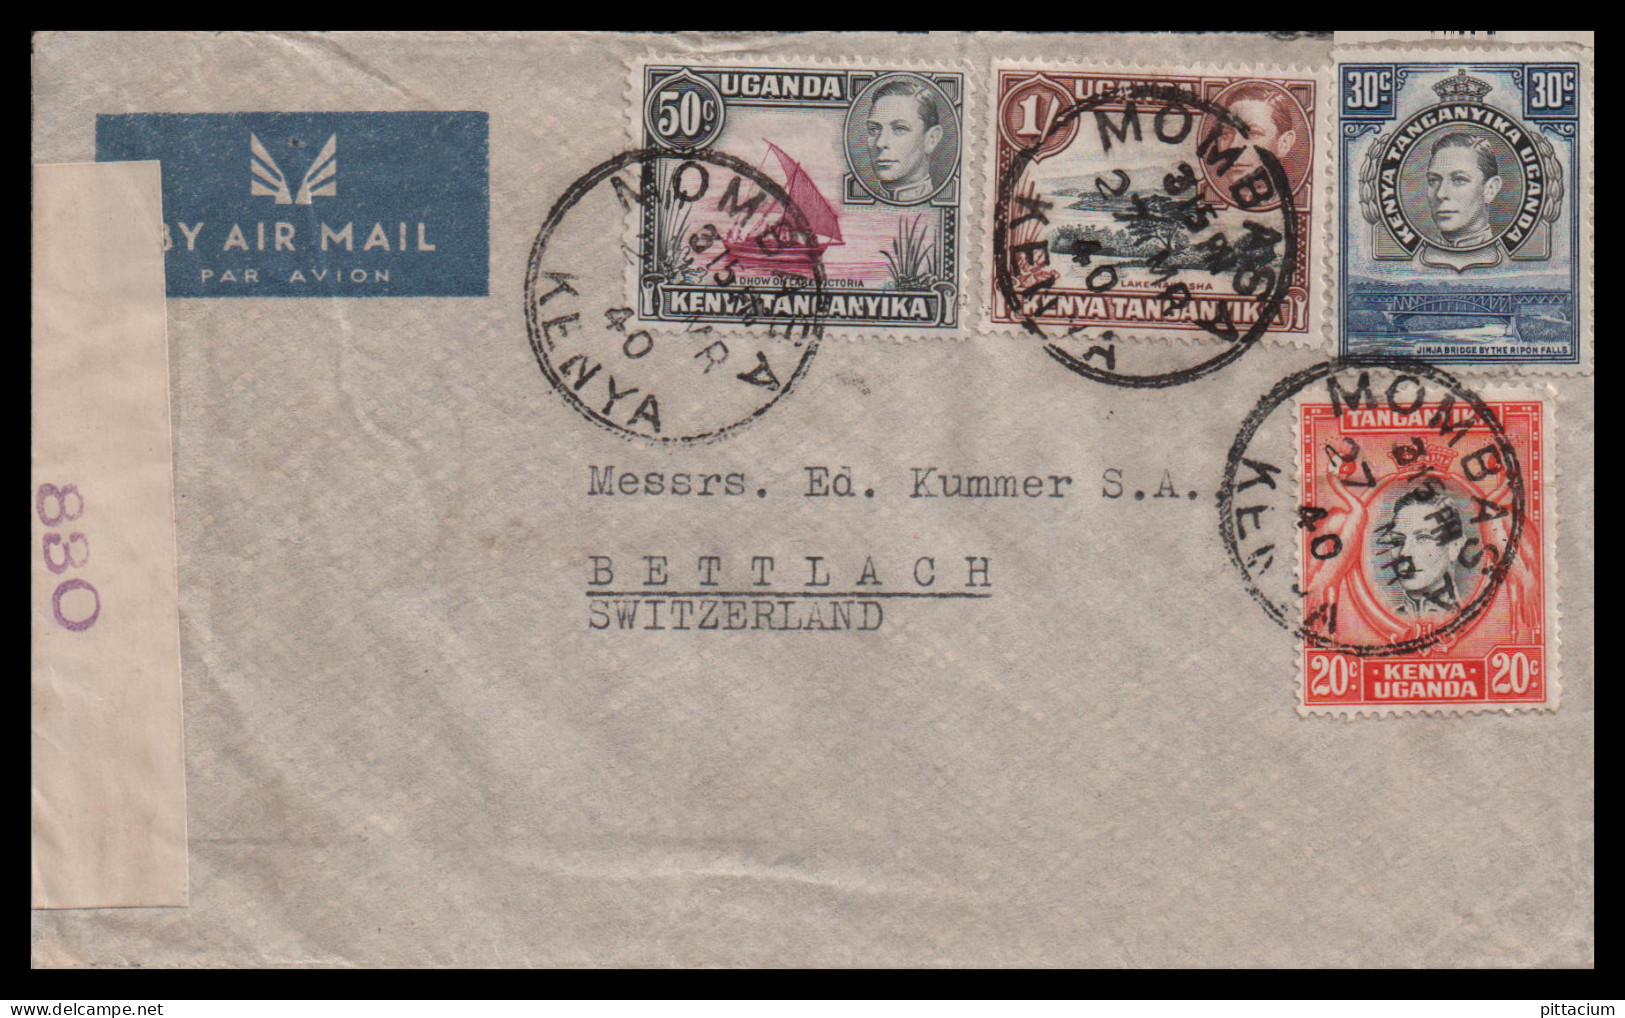 Grossbritannien Gebiete 1940: Luftpostbrief  | Afrika | Mombasa, Bettlach - Kenya & Ouganda